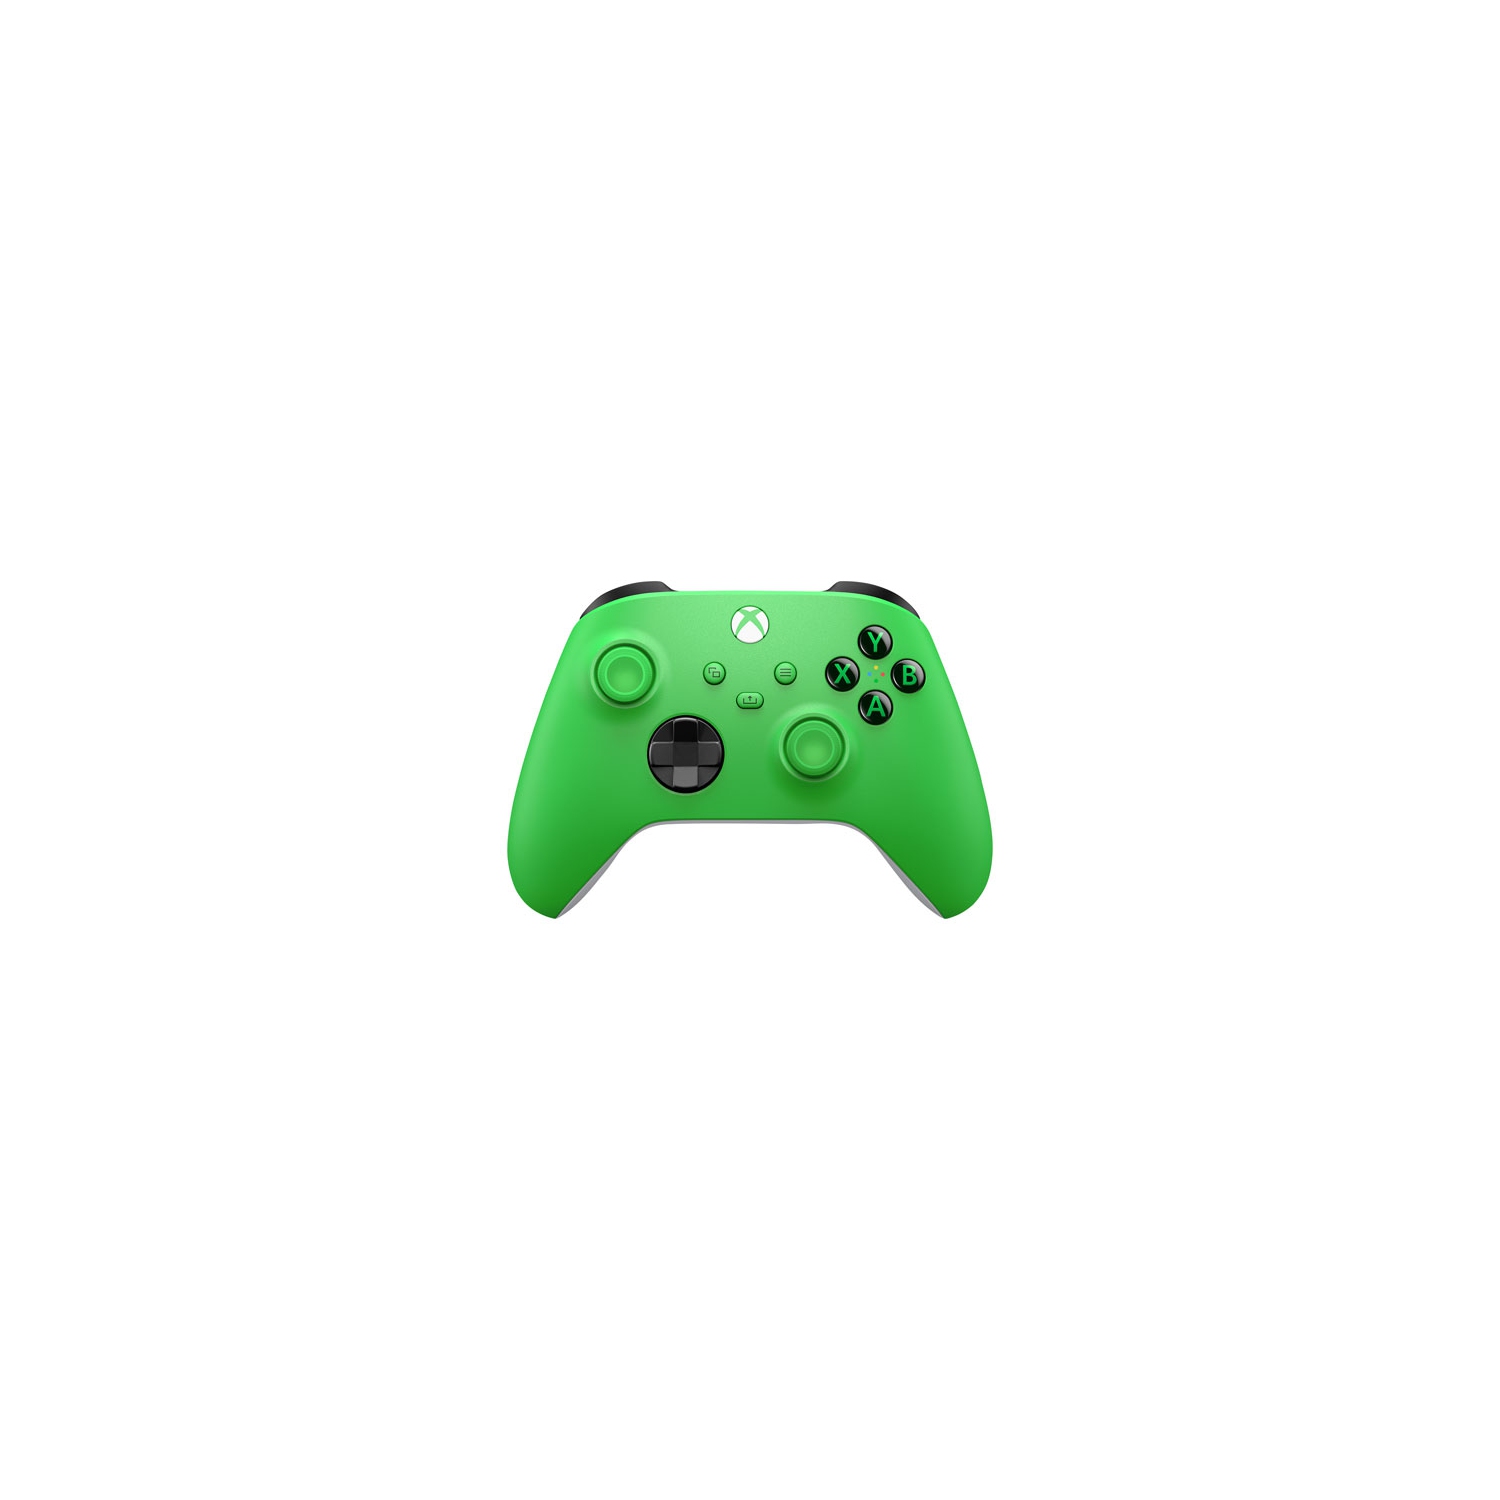 Refurbished (Good) Xbox Wireless Controller - Velocity Green (QAU-00090)